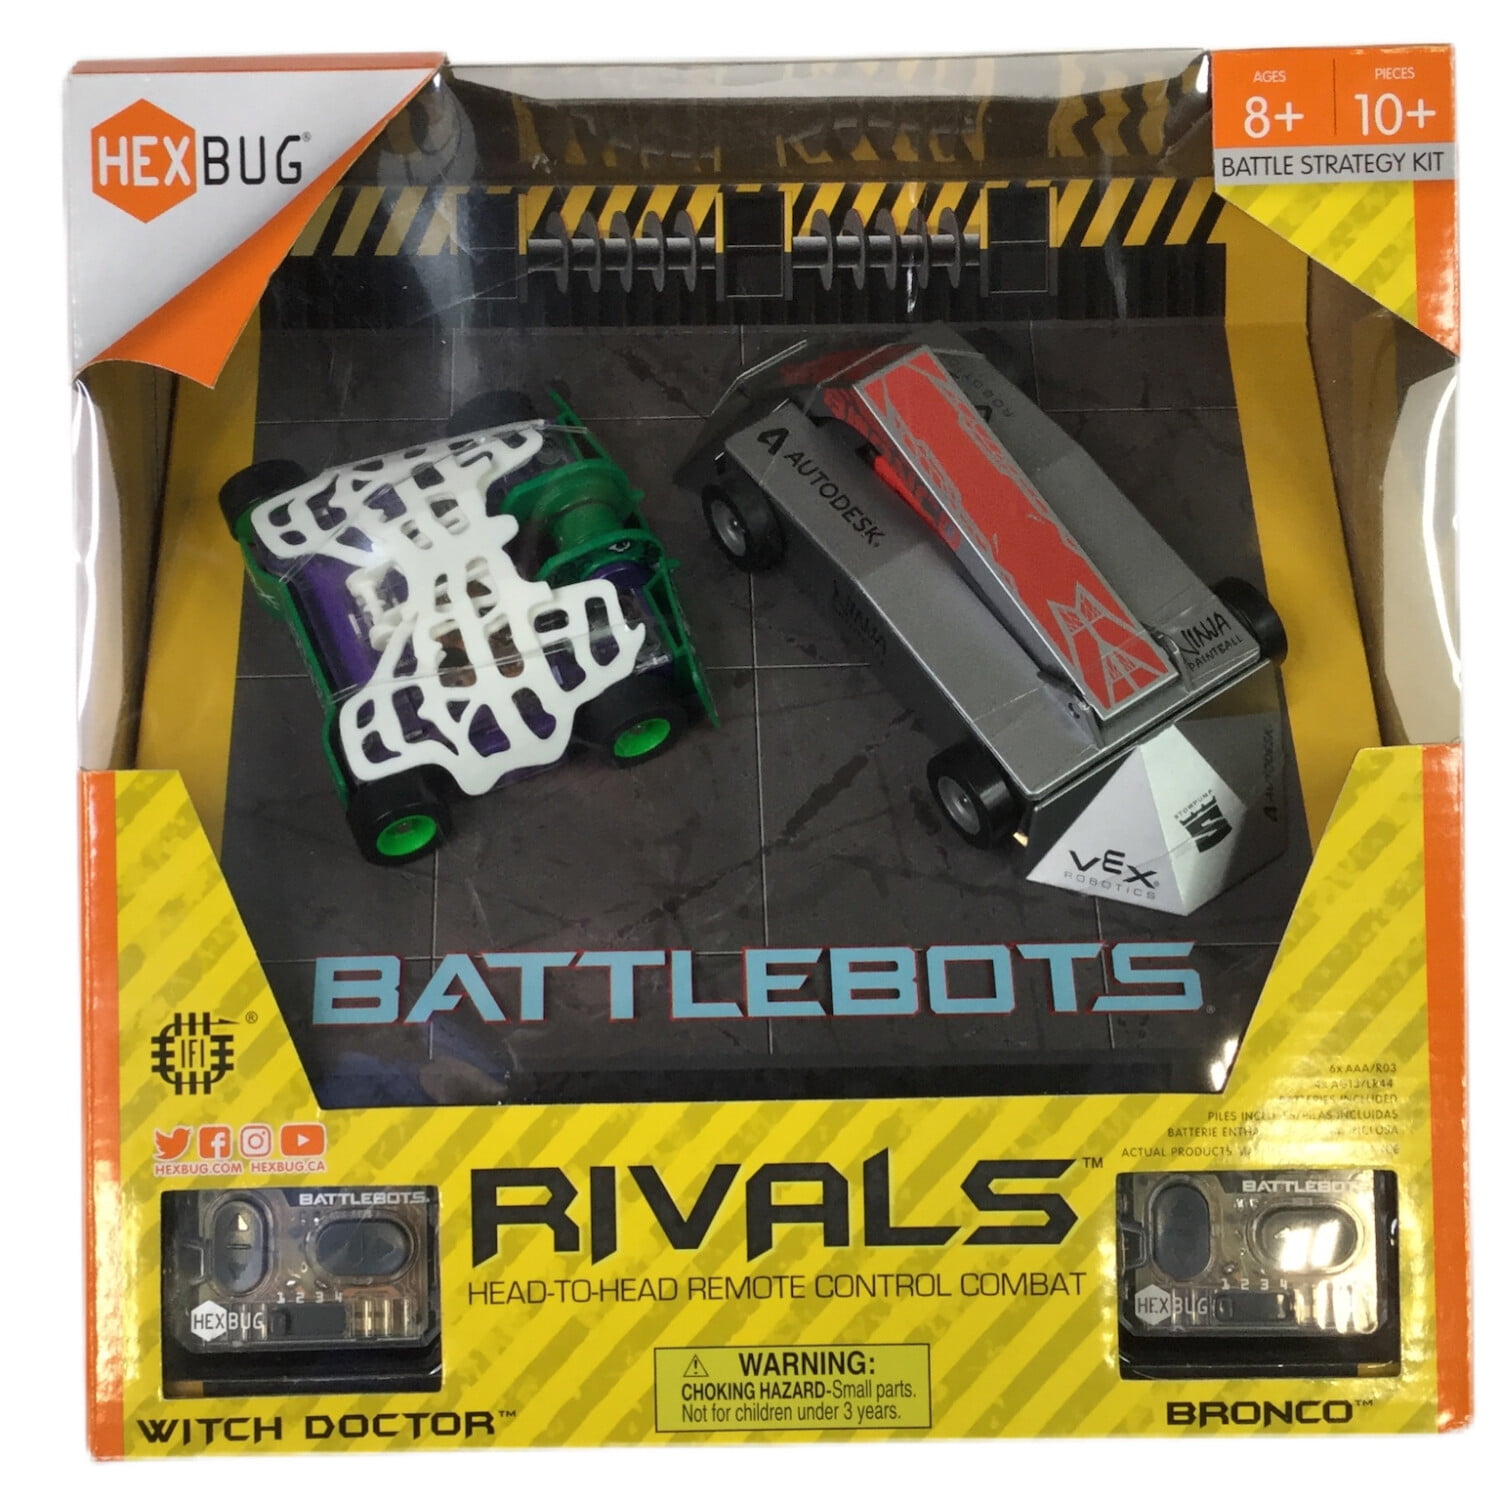 Battle Strategy Kit NIB HEXBUG BattleBots Rivals Bronco & Witch Doctor 